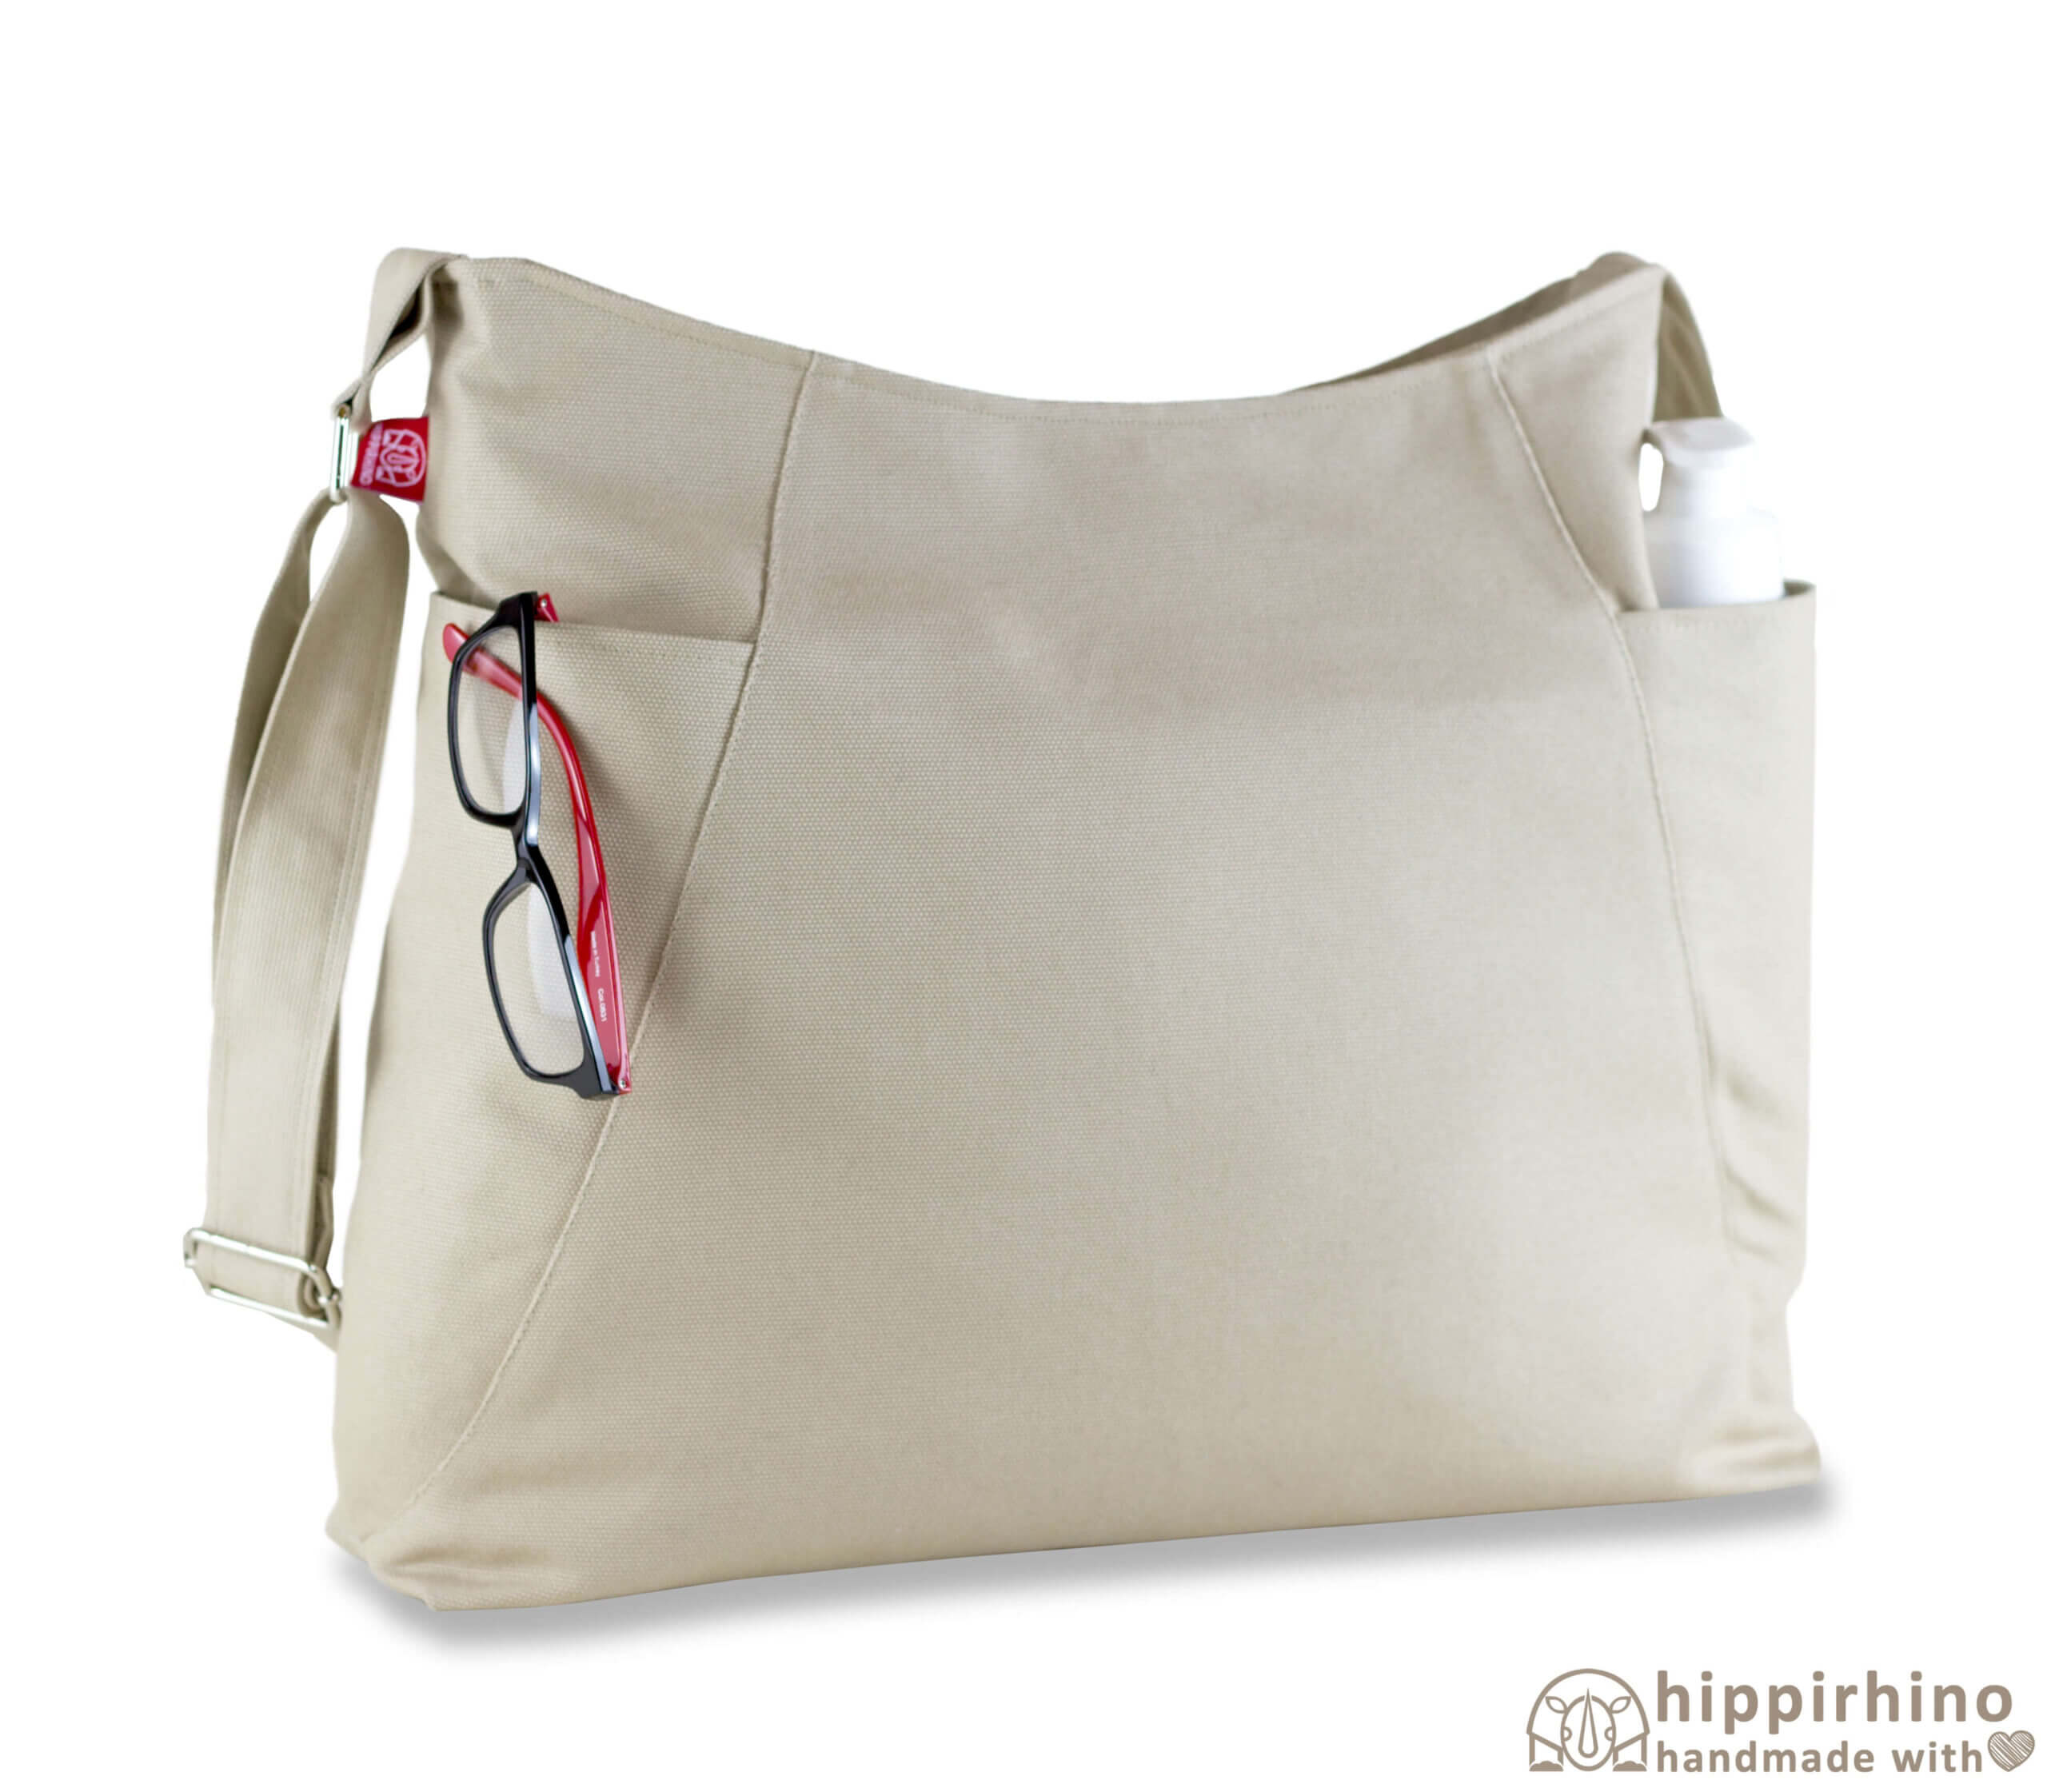 Shopperz Bao Bao Sling Bag, Closure Type: Zip